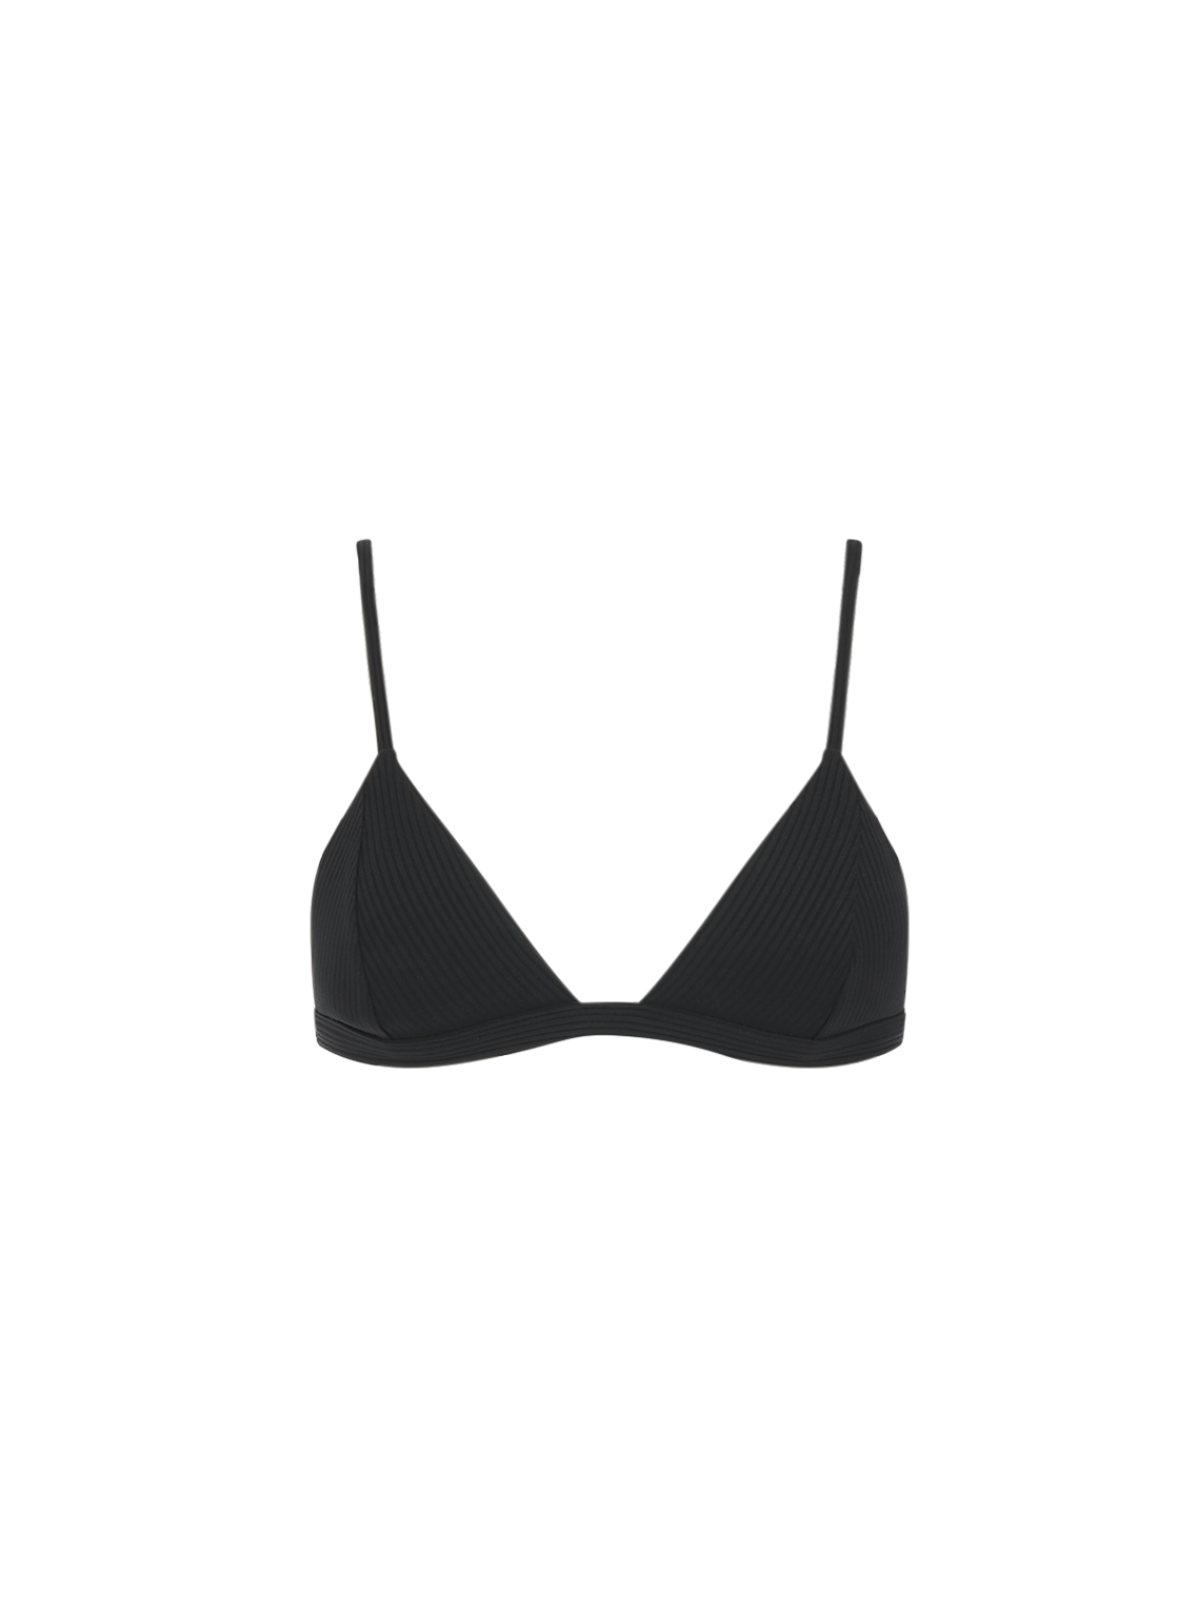 Valentina Triangle Bikini Top - Midnight Black Ribbed